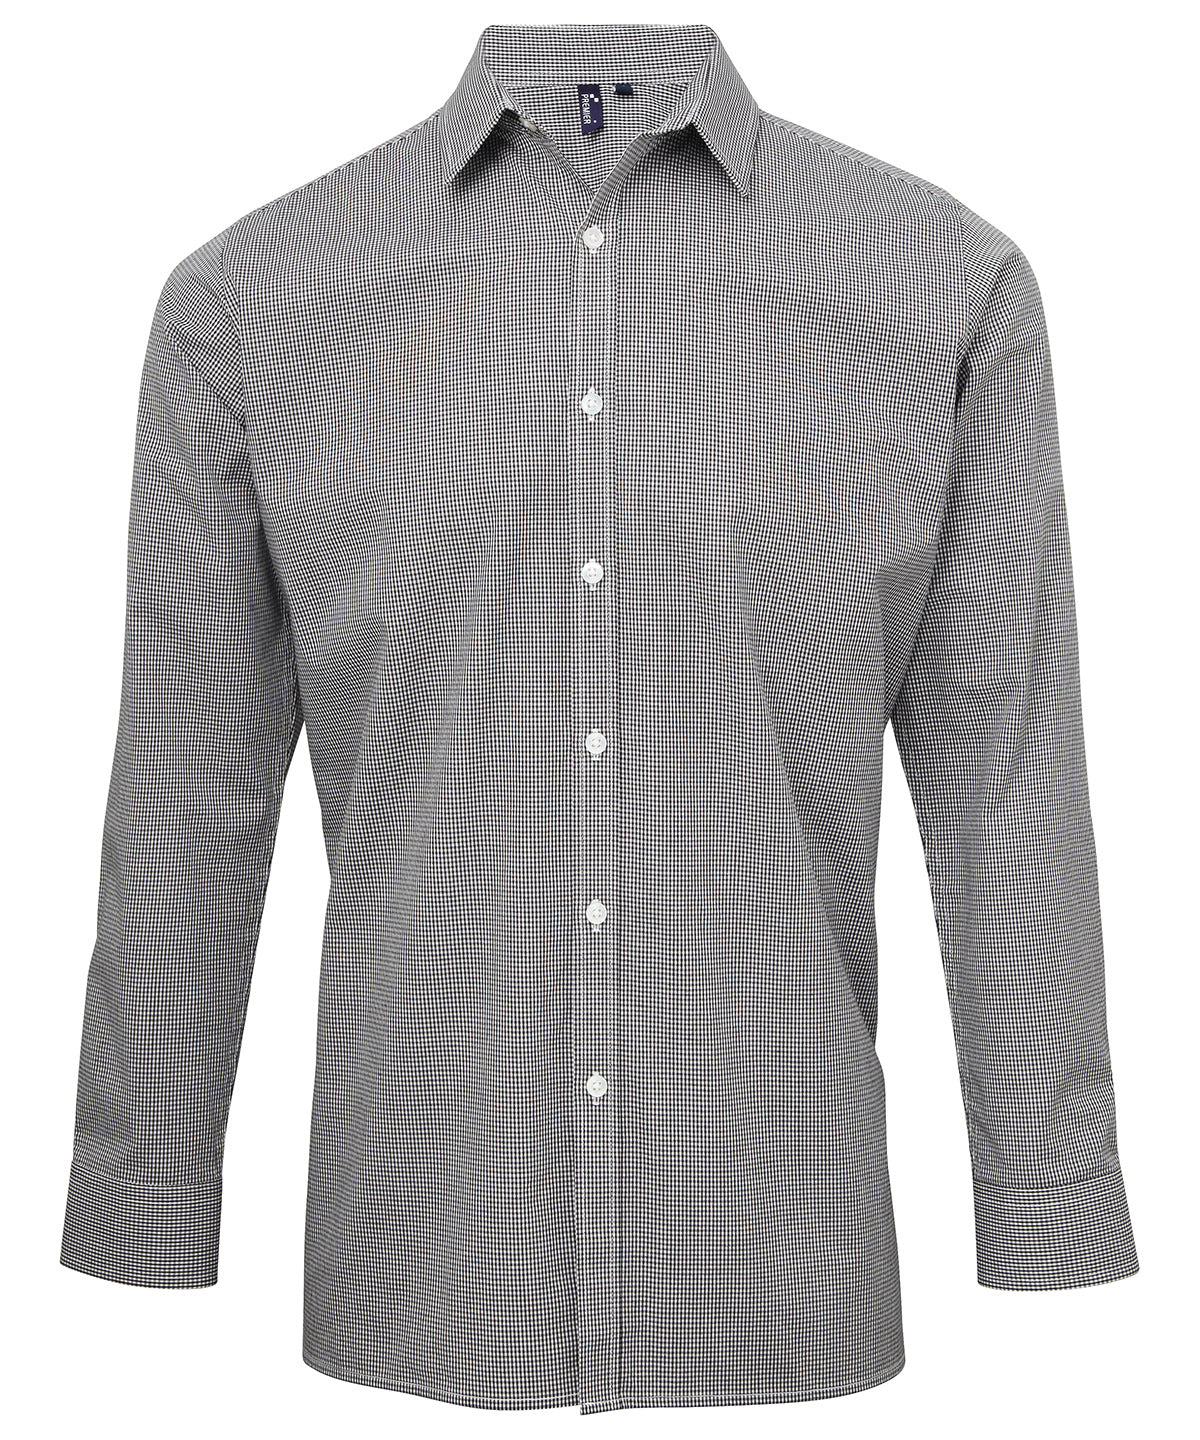 Microcheck (Gingham) Long Sleeve Cotton Shirt